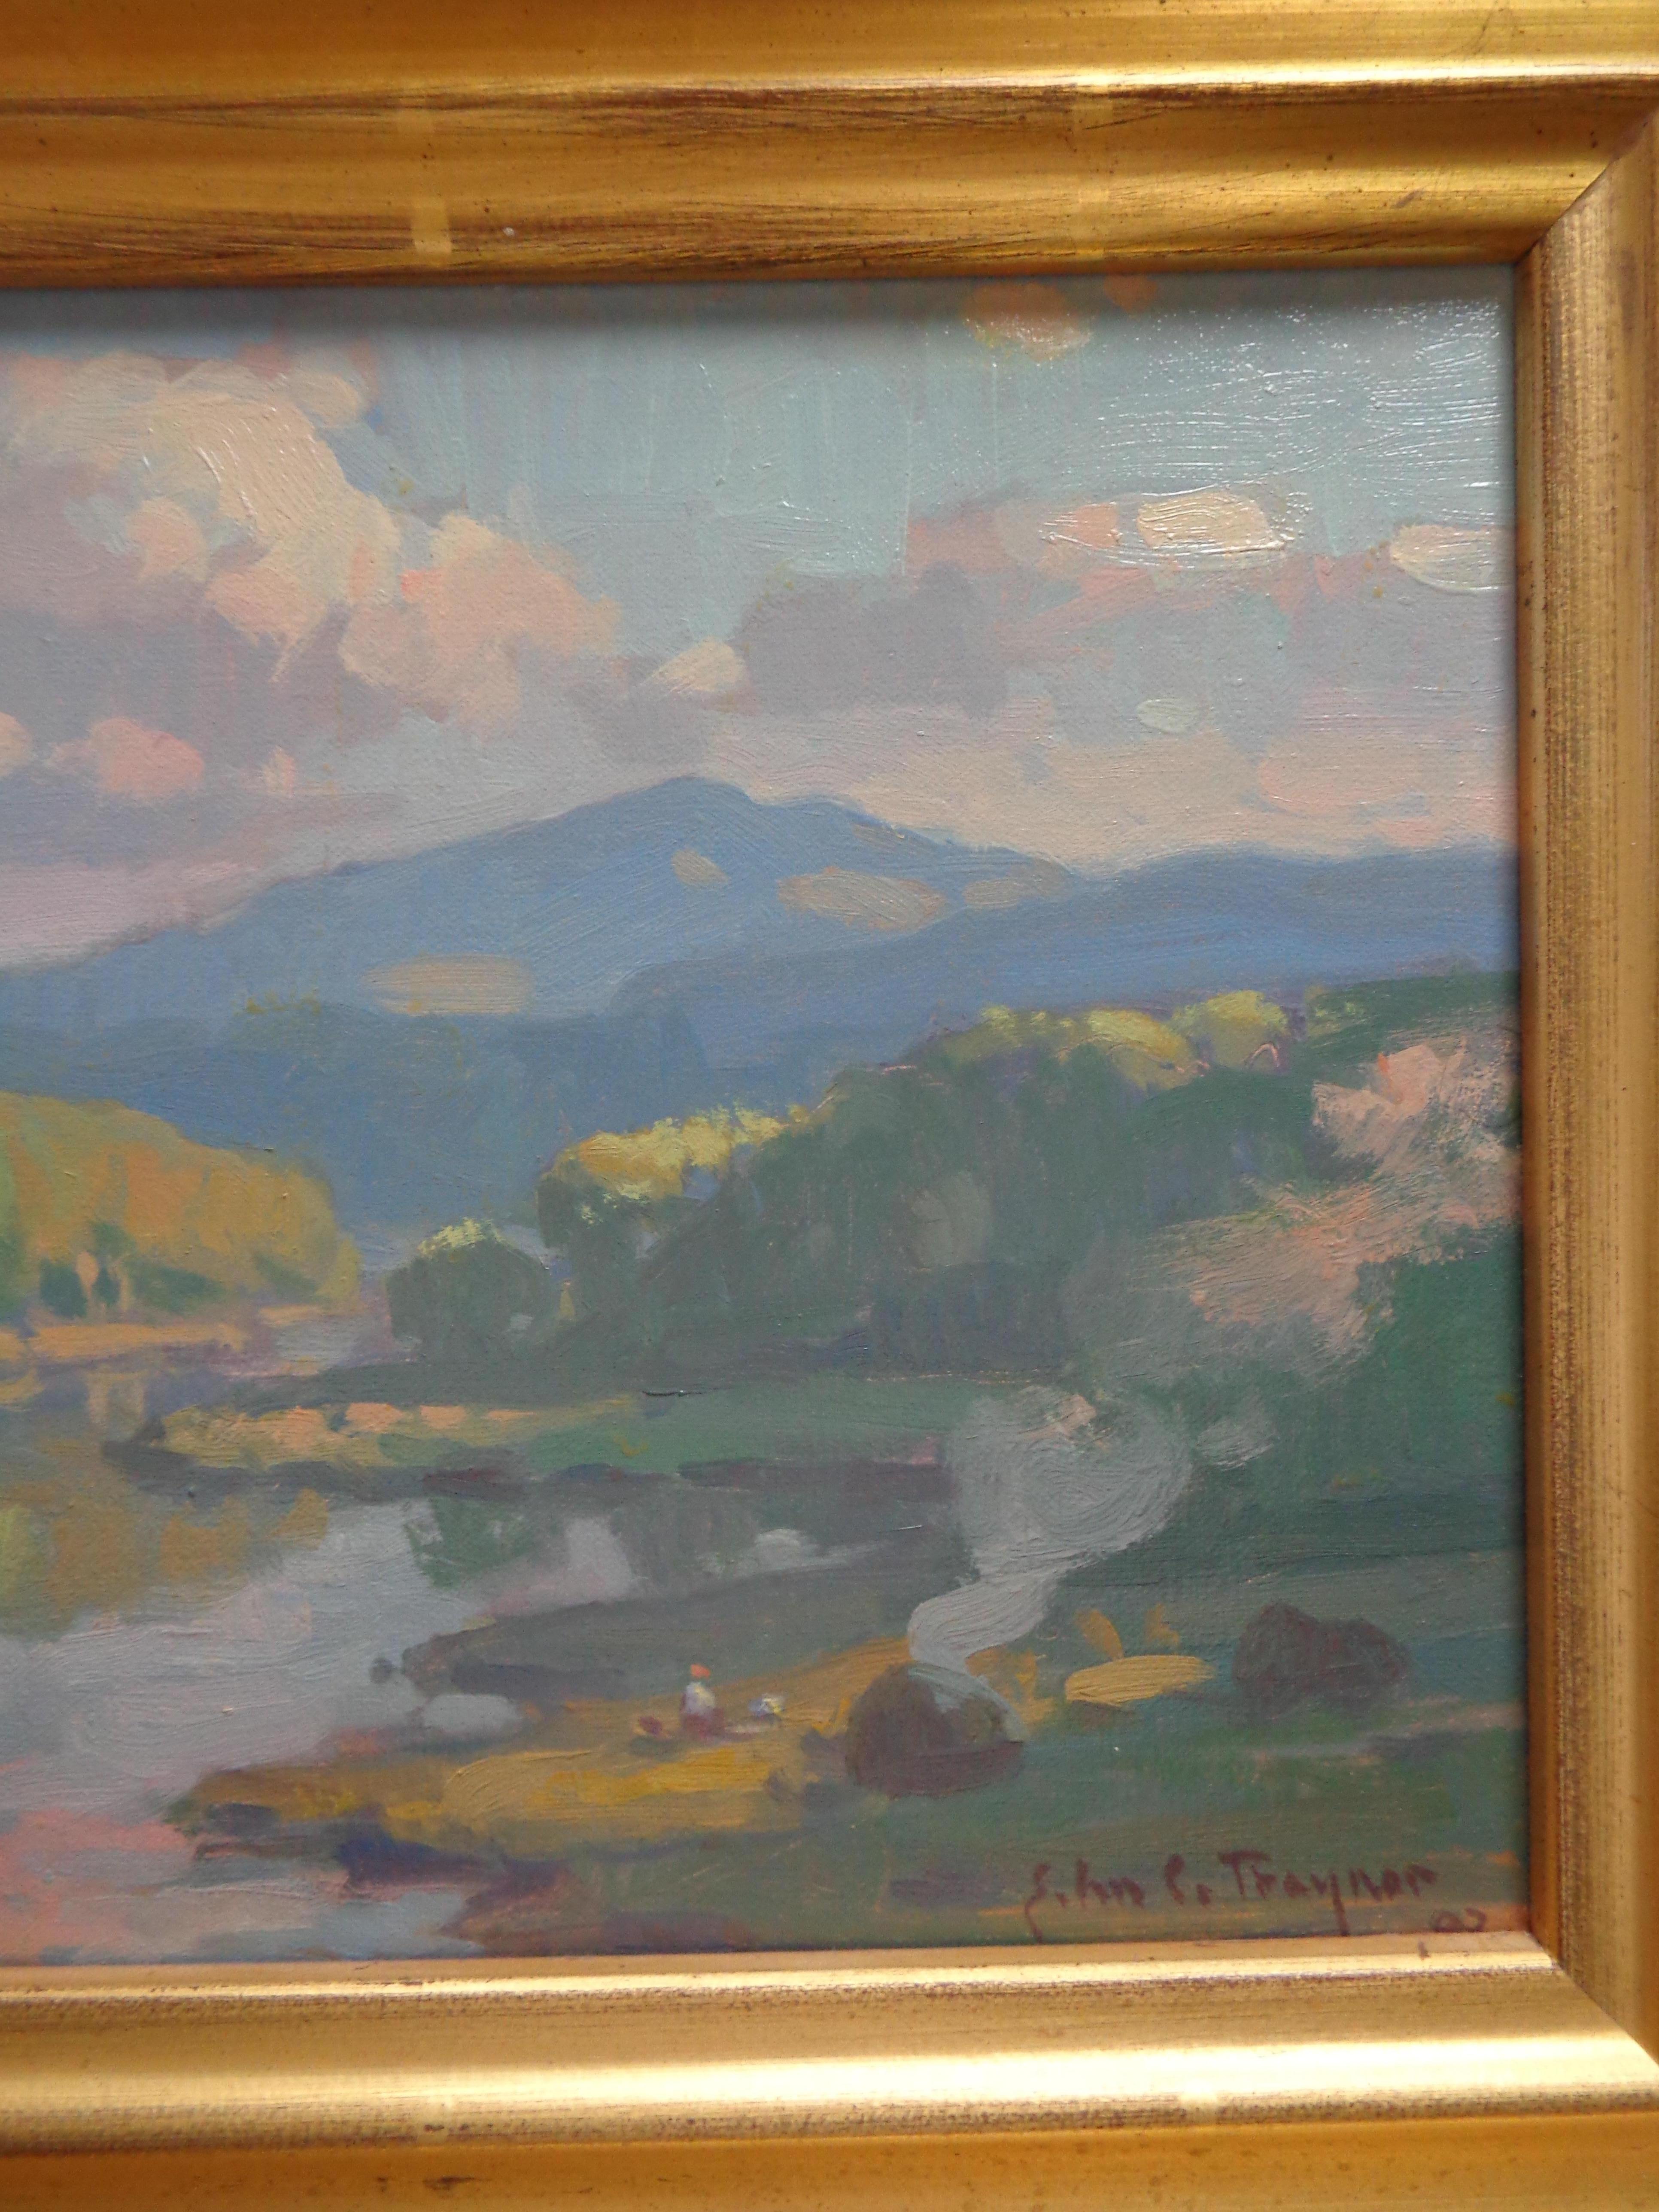 Landscape Farm Oil painting John C Traynor Salmagundi Club Auction Mt Ascutny For Sale 1